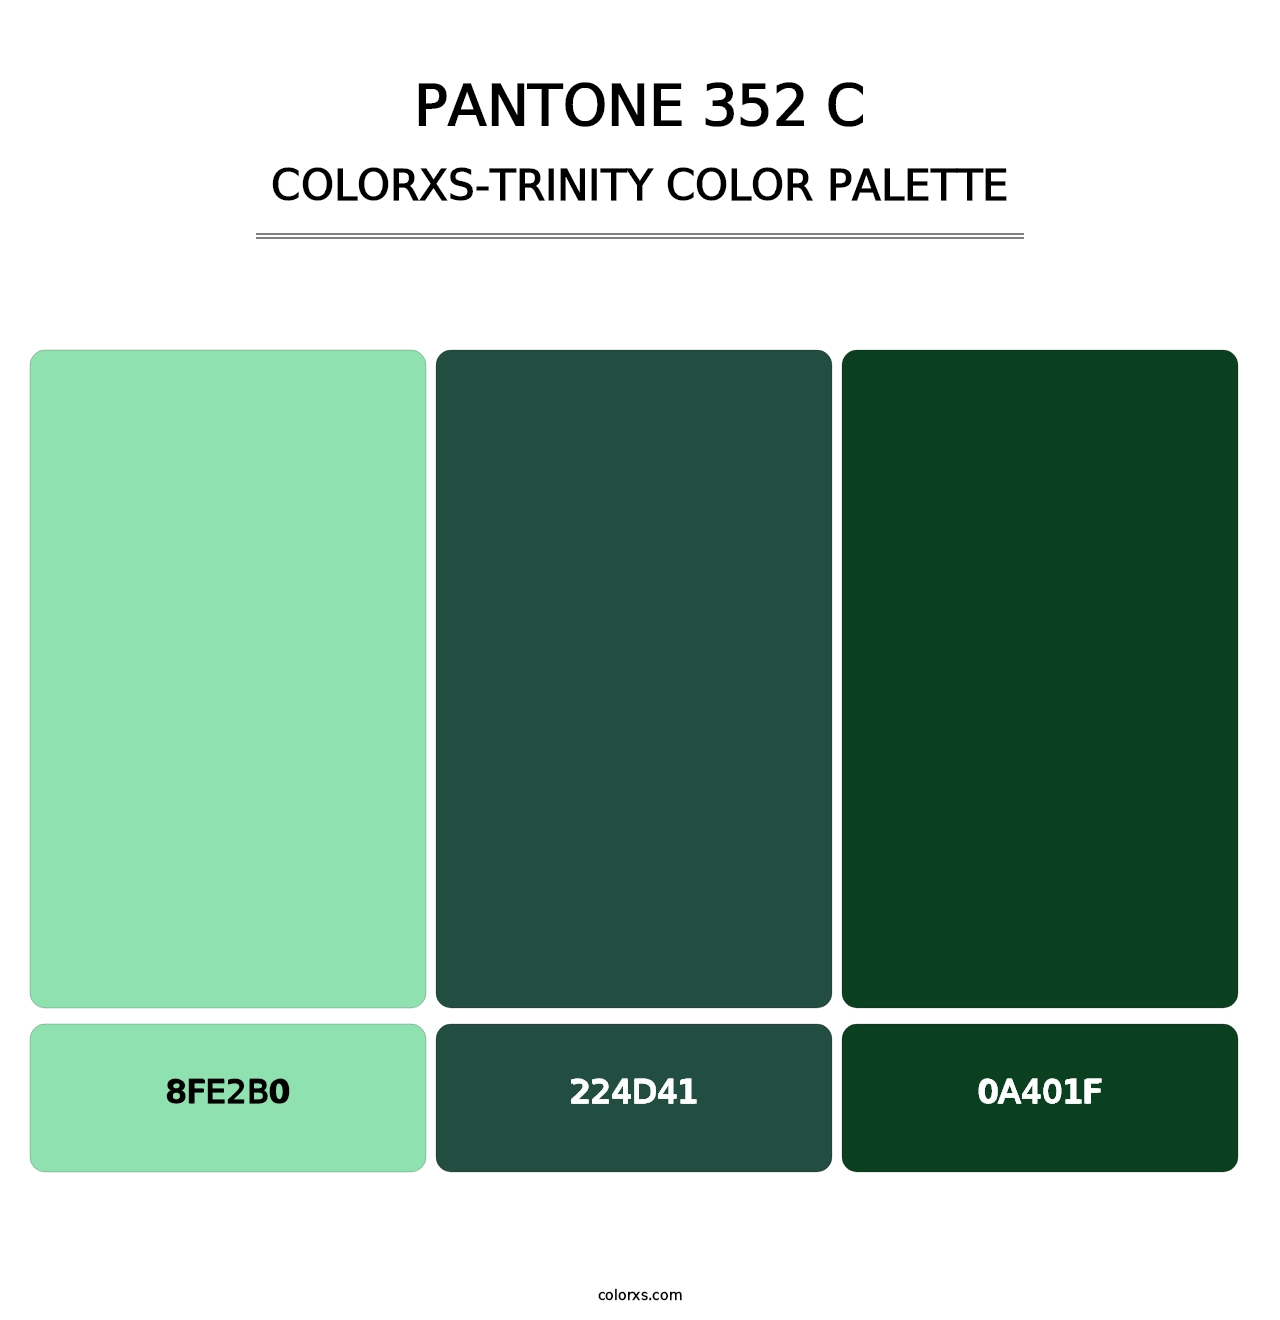 PANTONE 352 C - Colorxs Trinity Palette